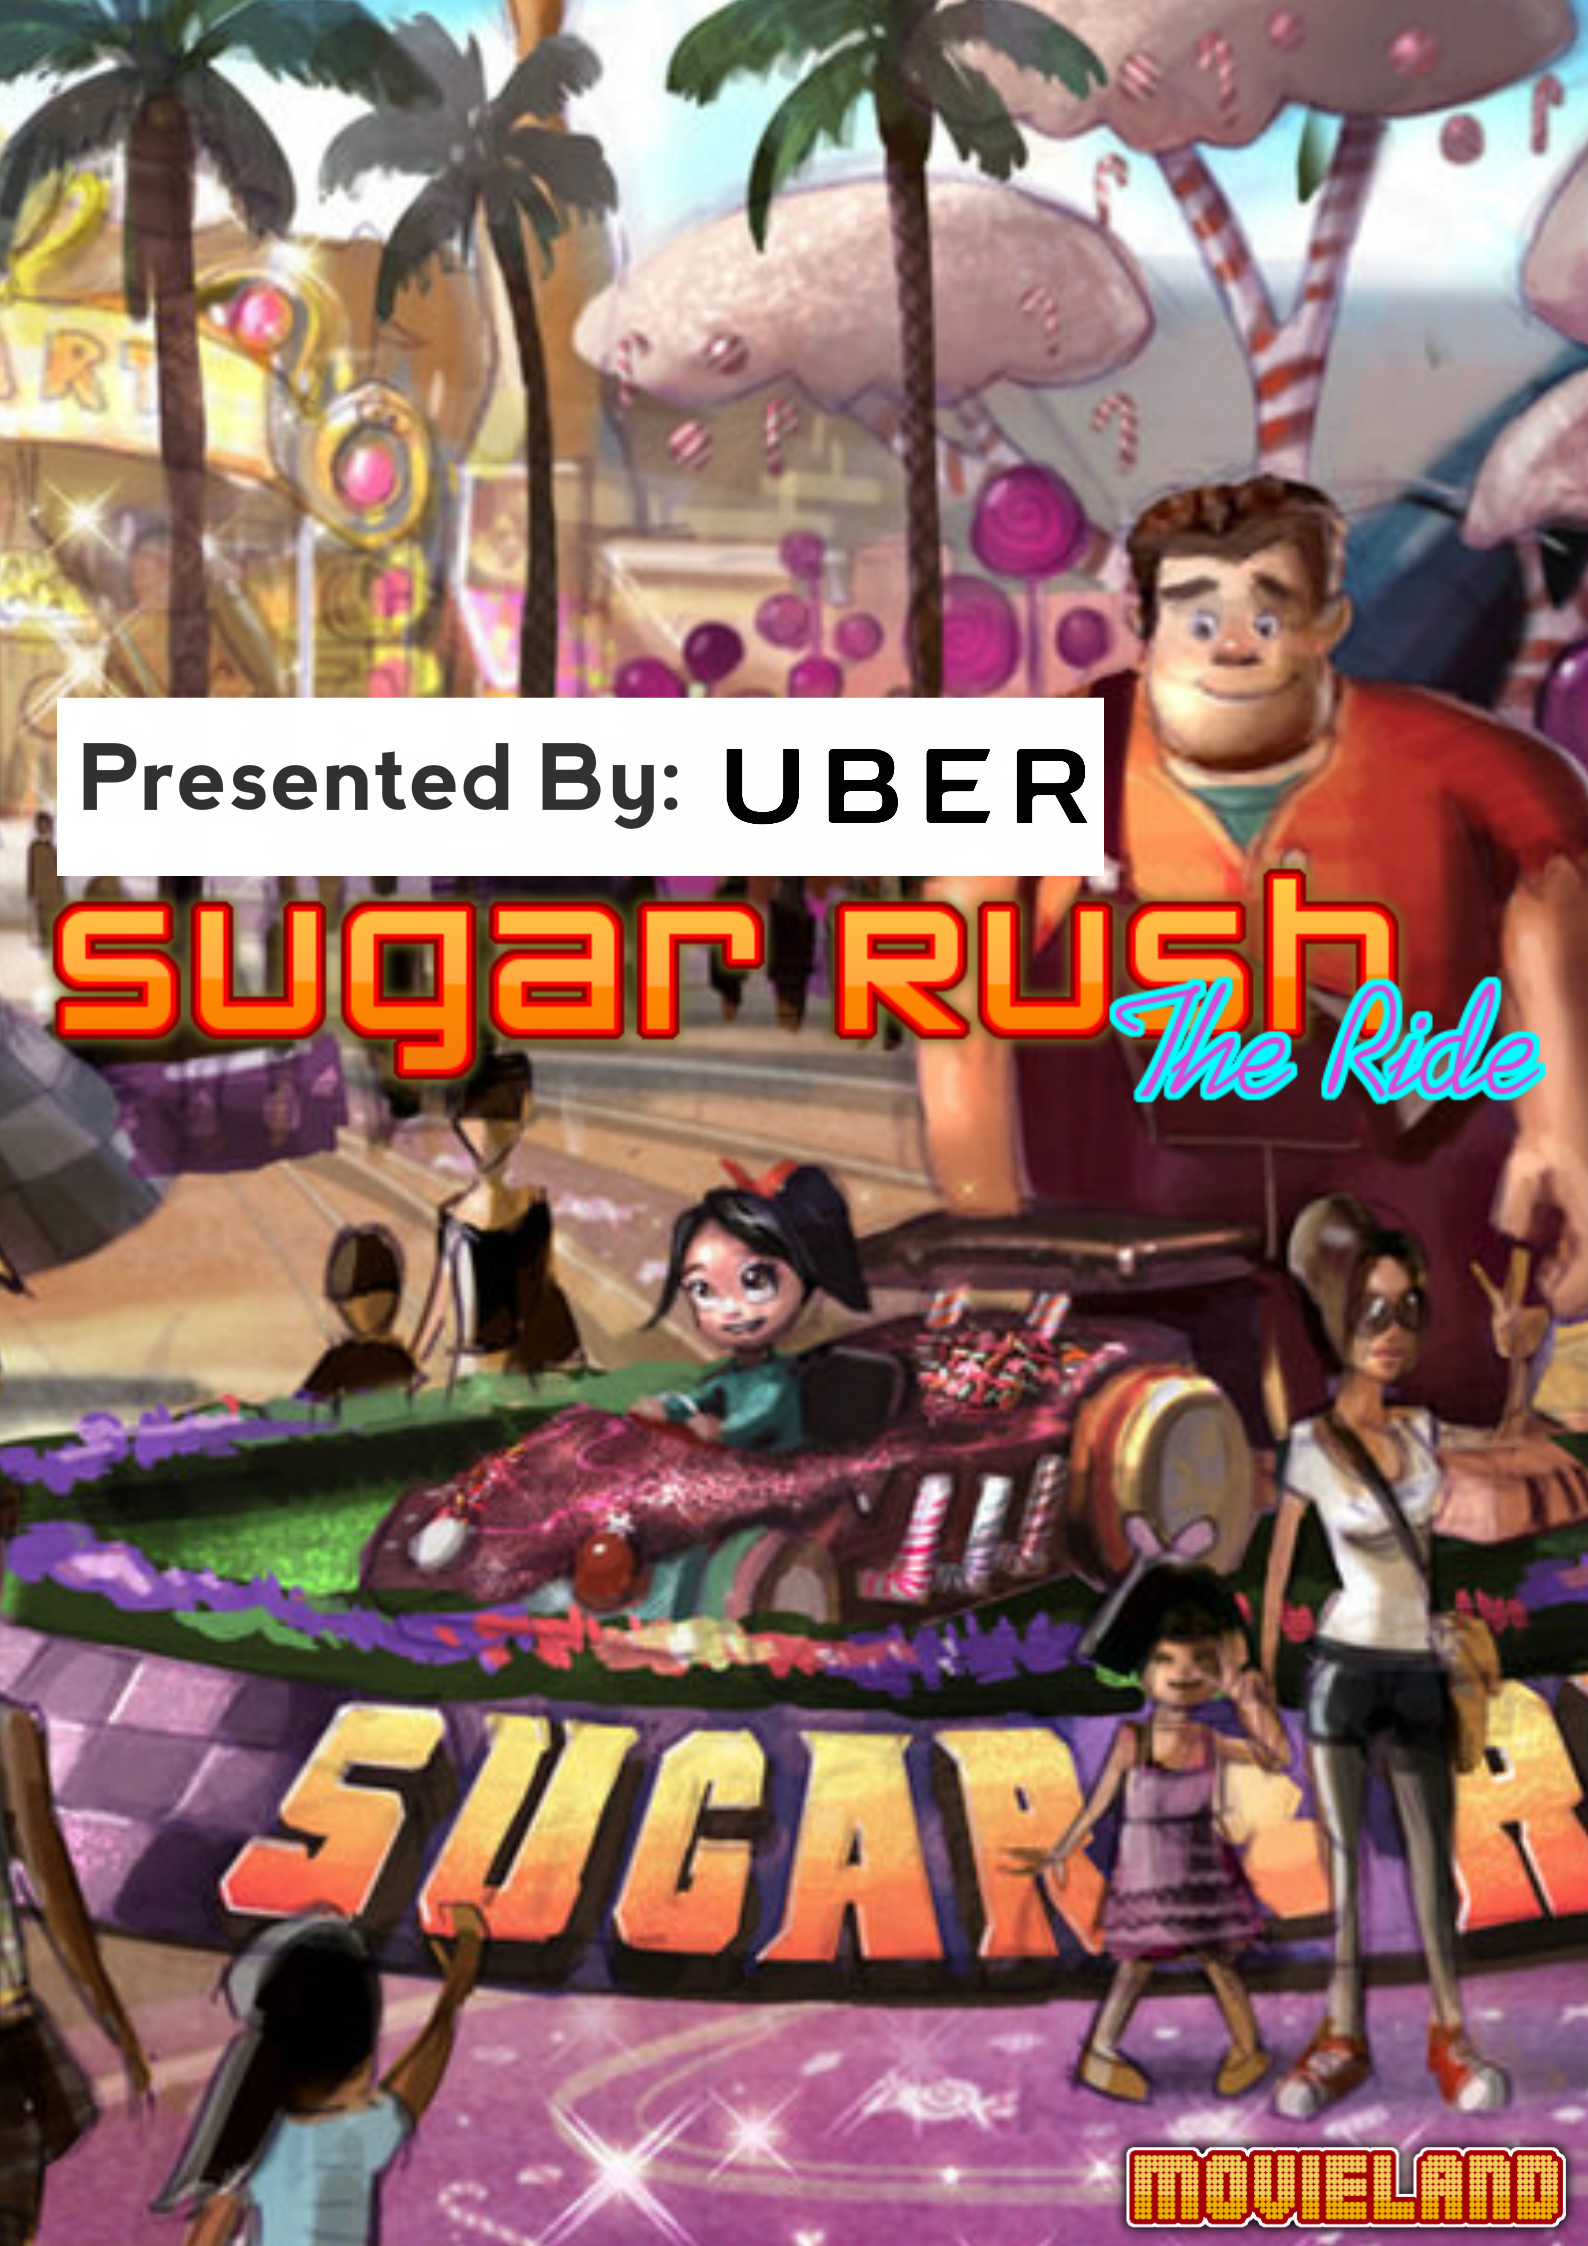 ride sugar rush